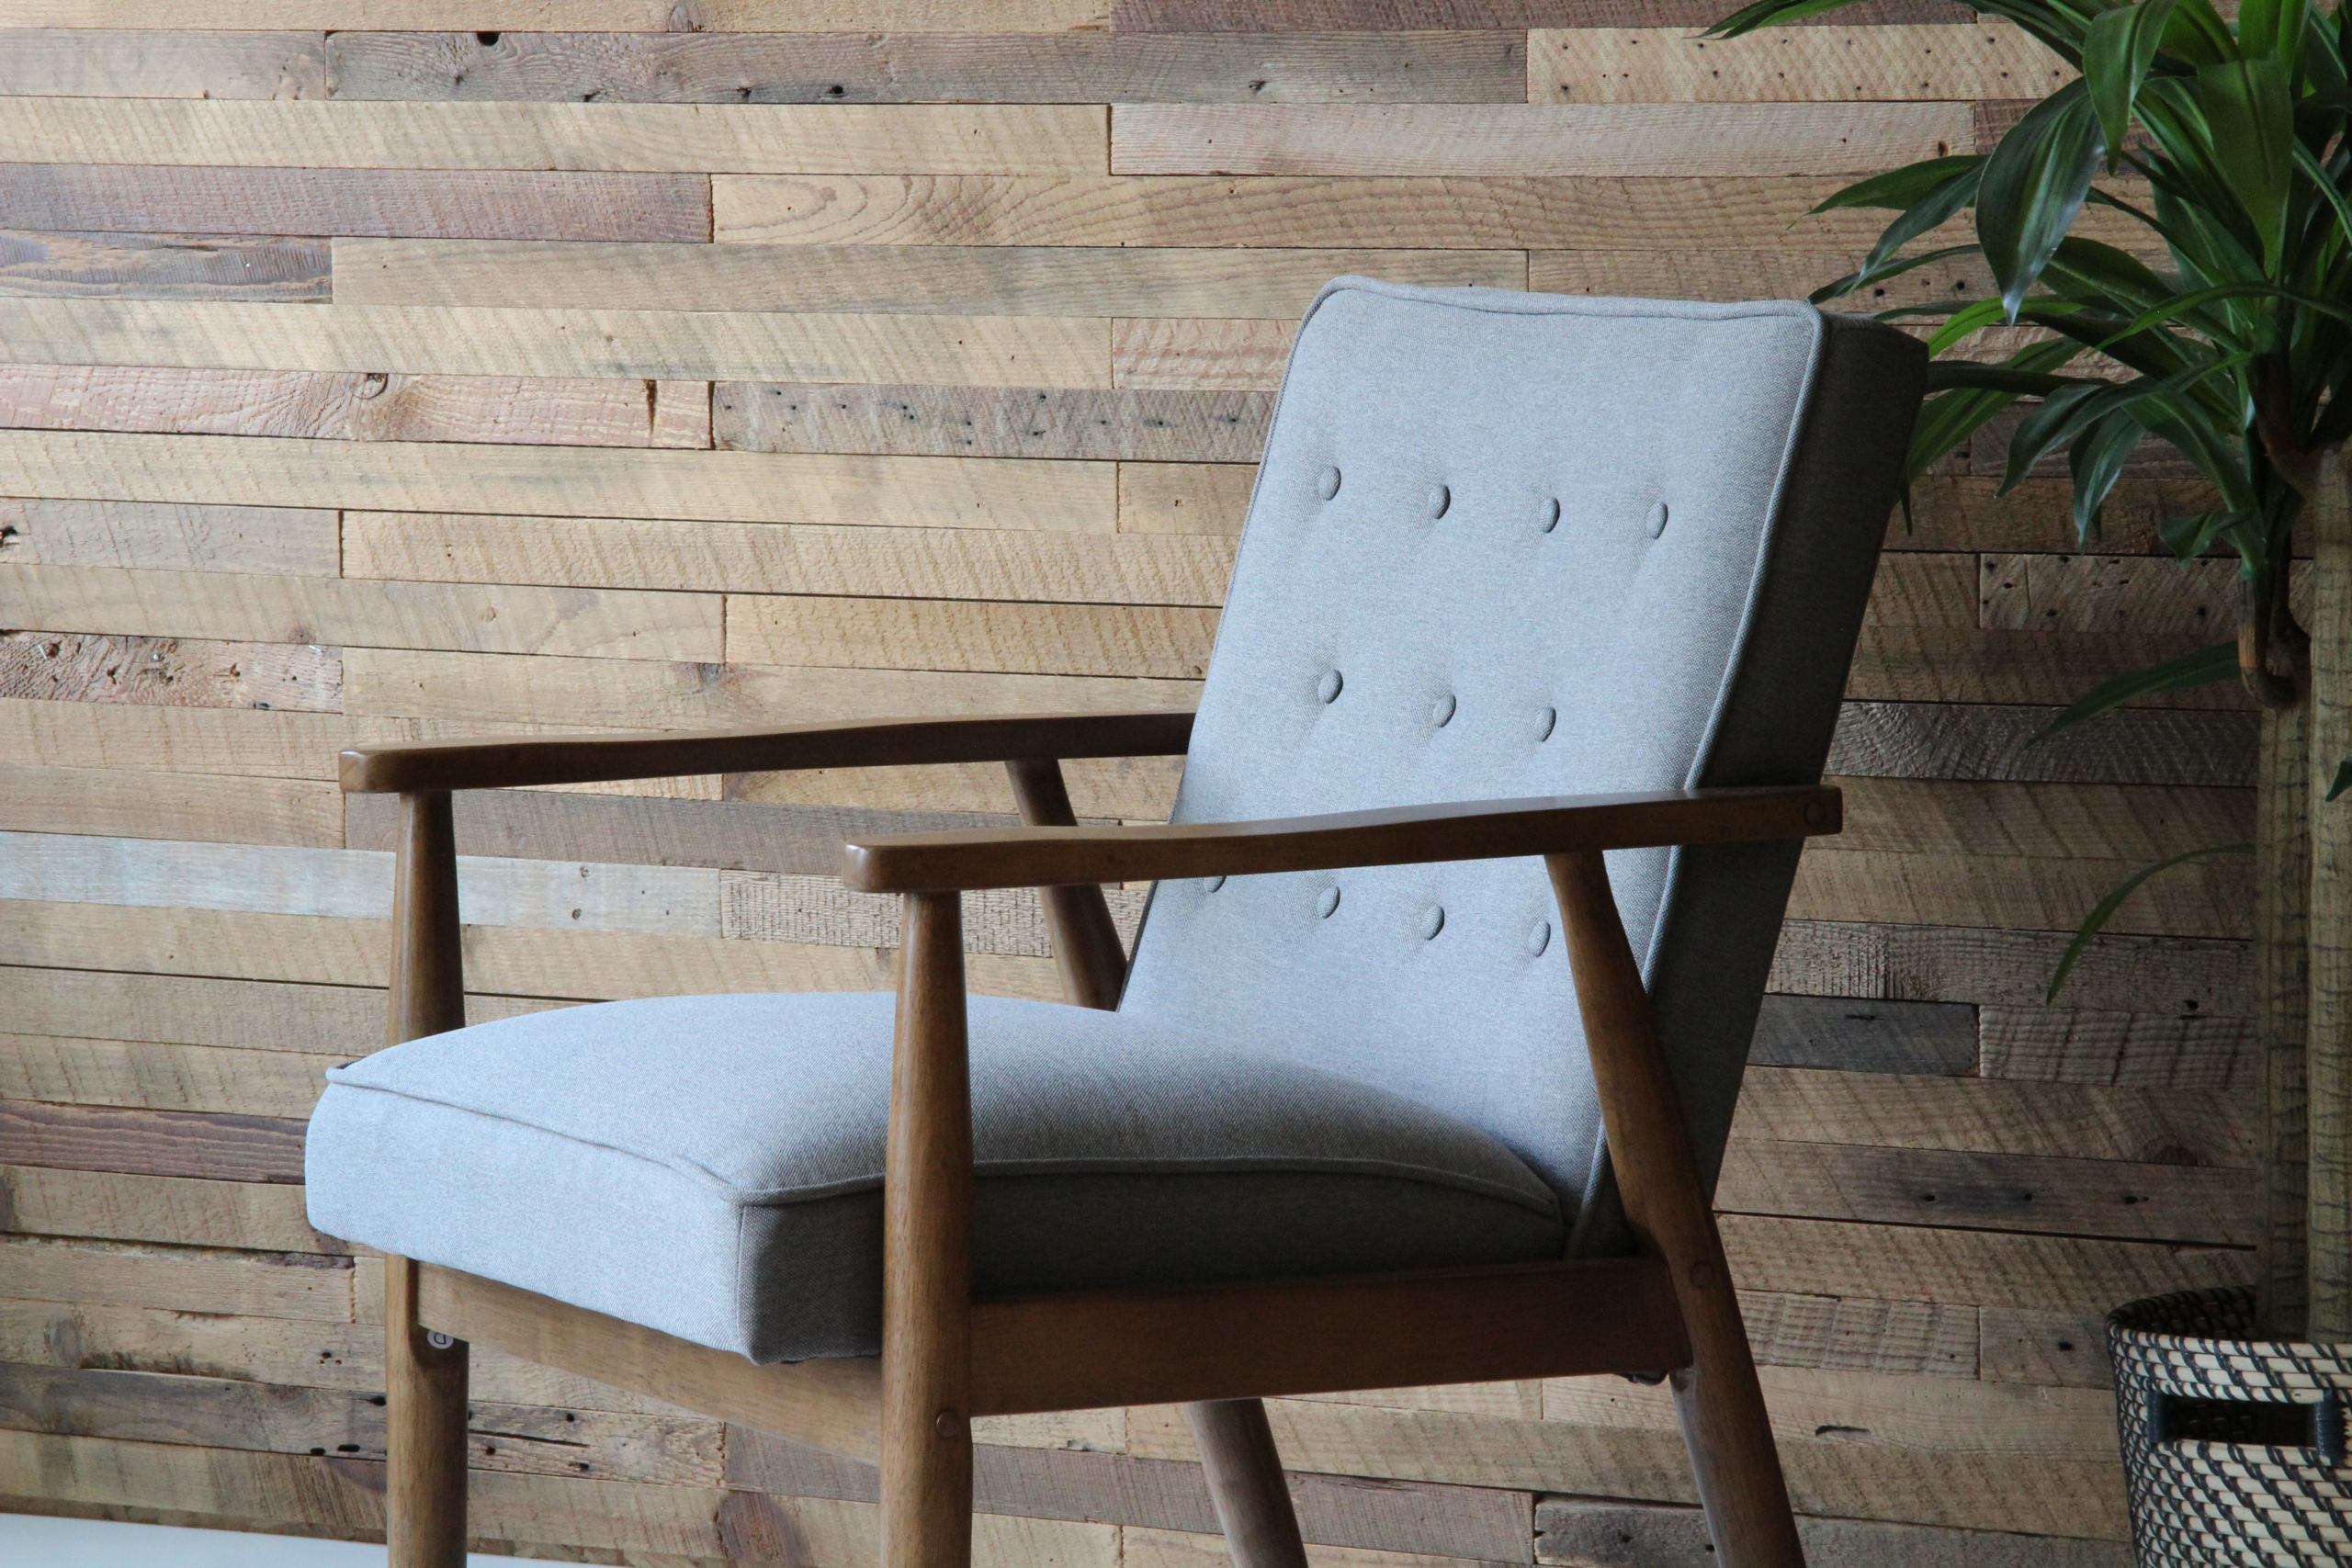 Reclaimed Wood Planks Bundle - Chair & Chisel